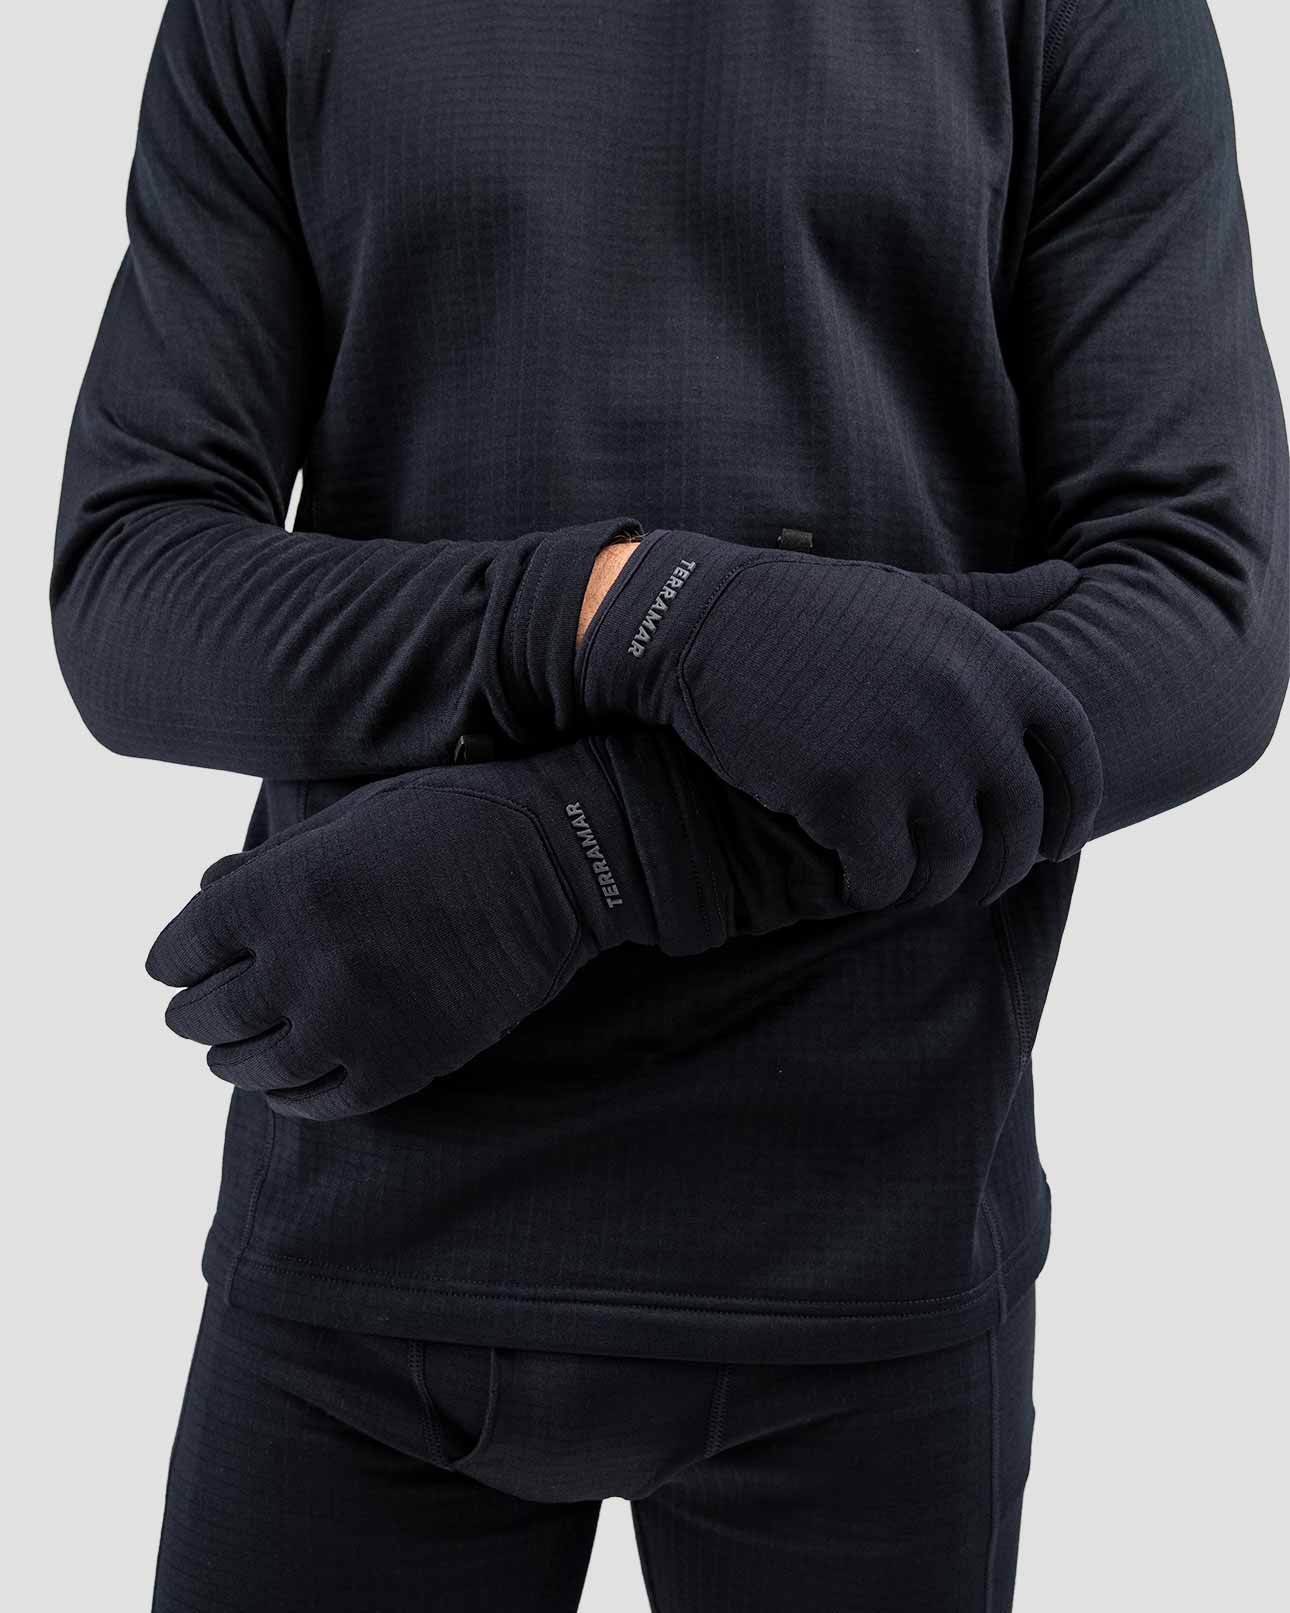 Ecolator® Heavyweight Performance Glove Liners | Color: Black